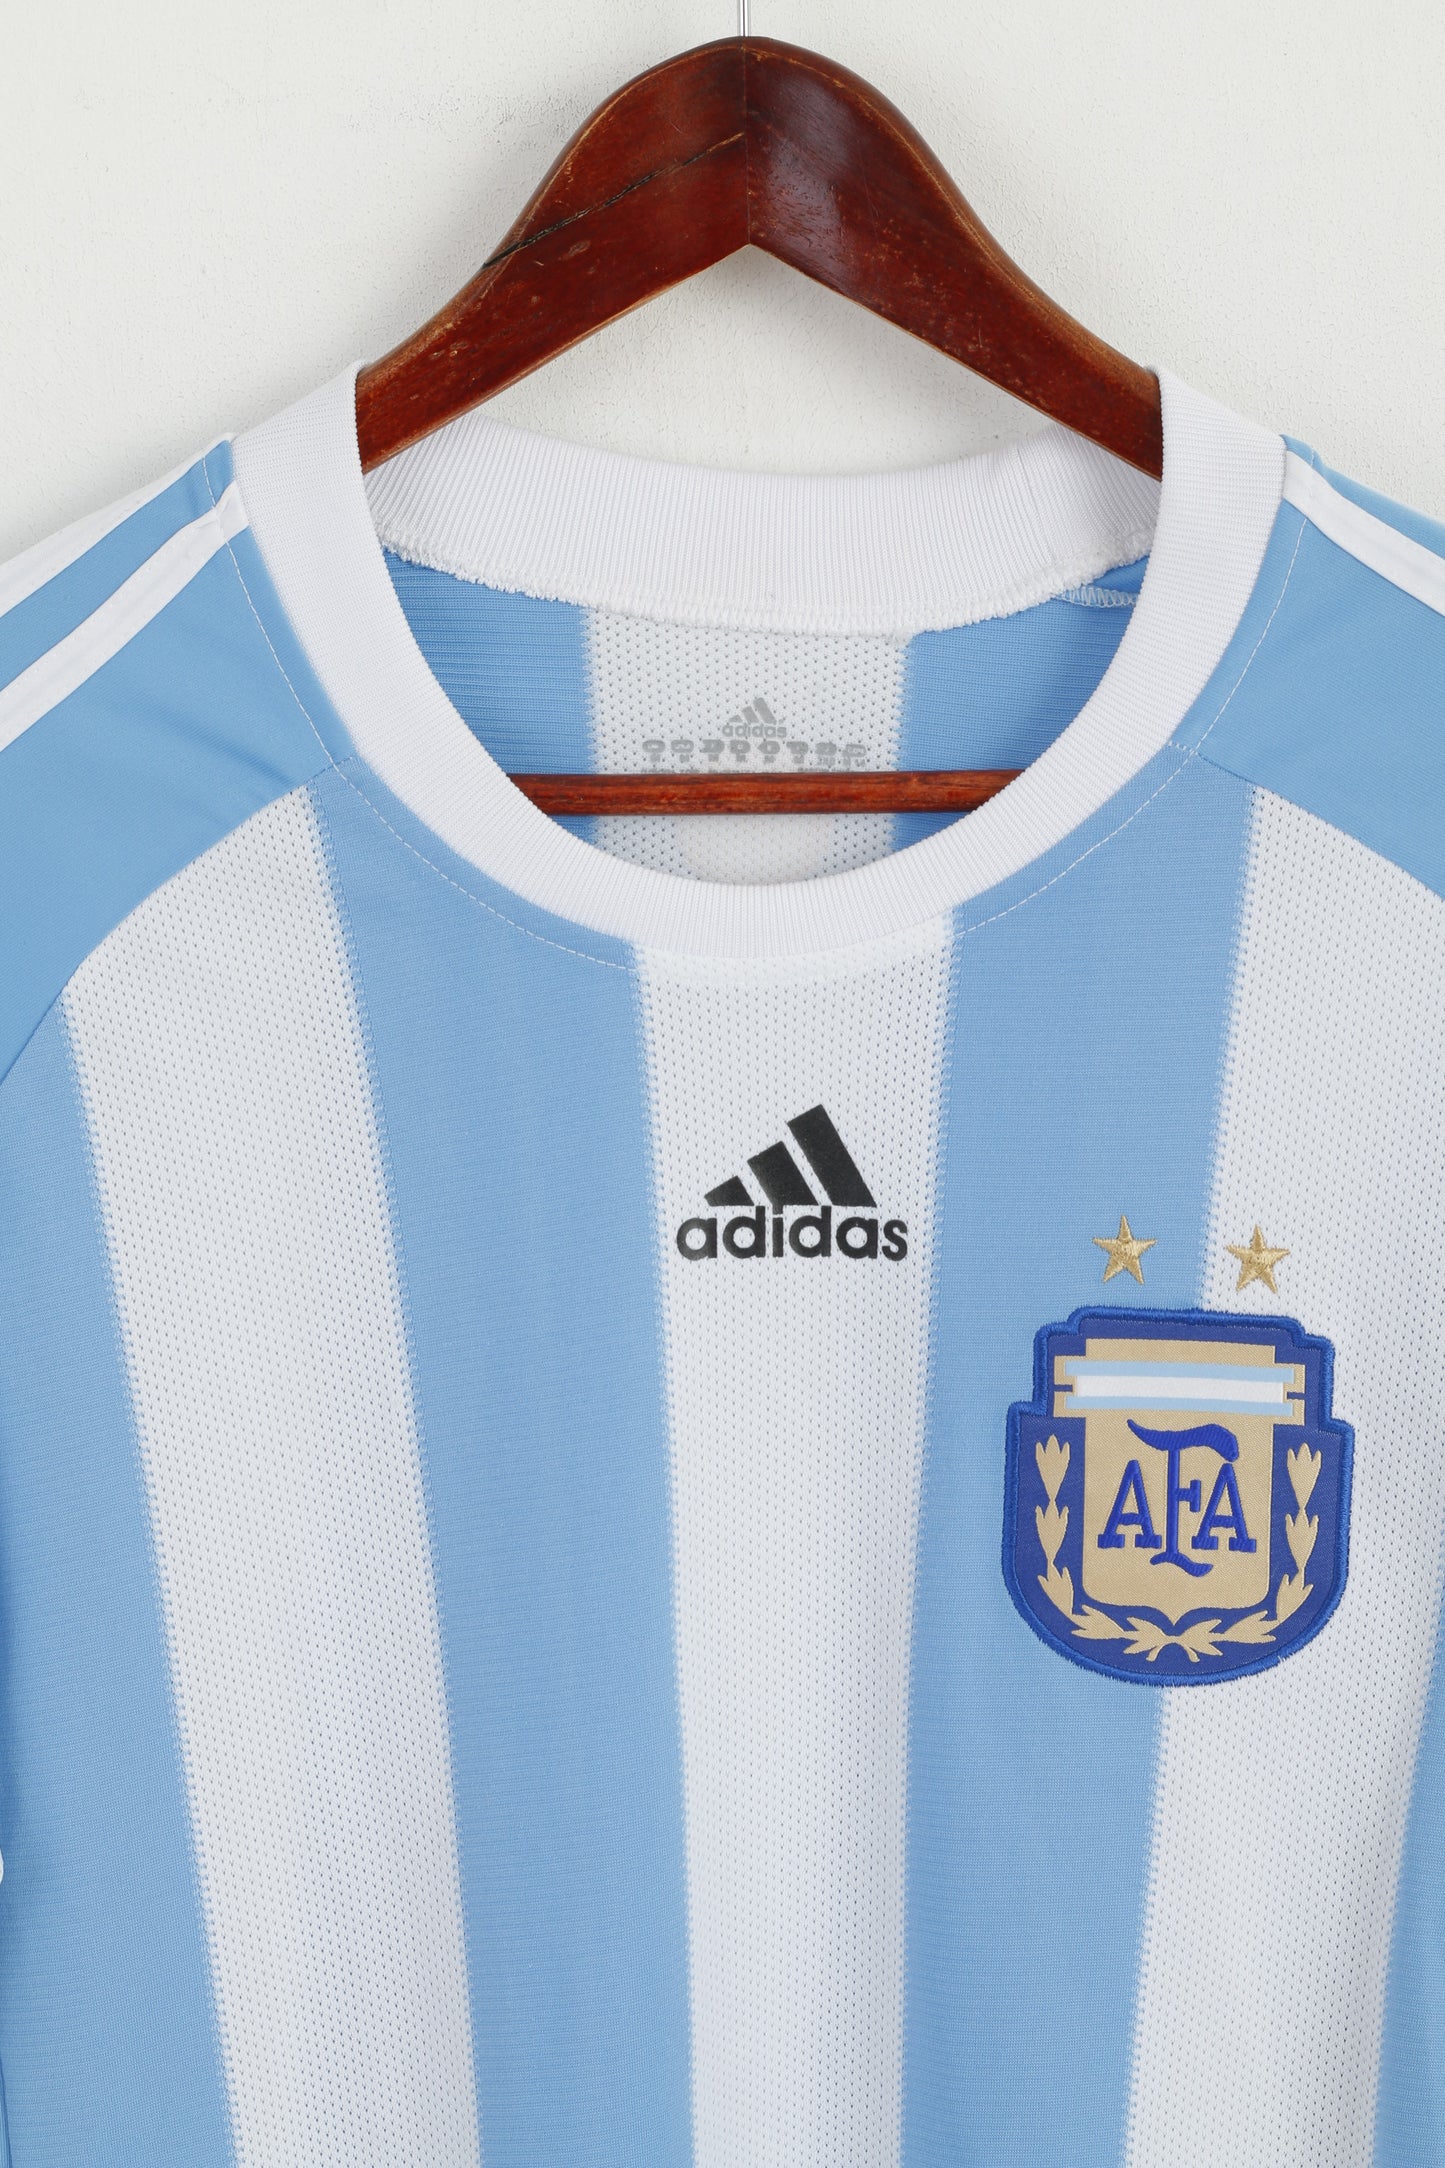 Maglia Adidas AFA da uomo M bianca blu a righe Argentina calcio calcio Trikot maglia vintage